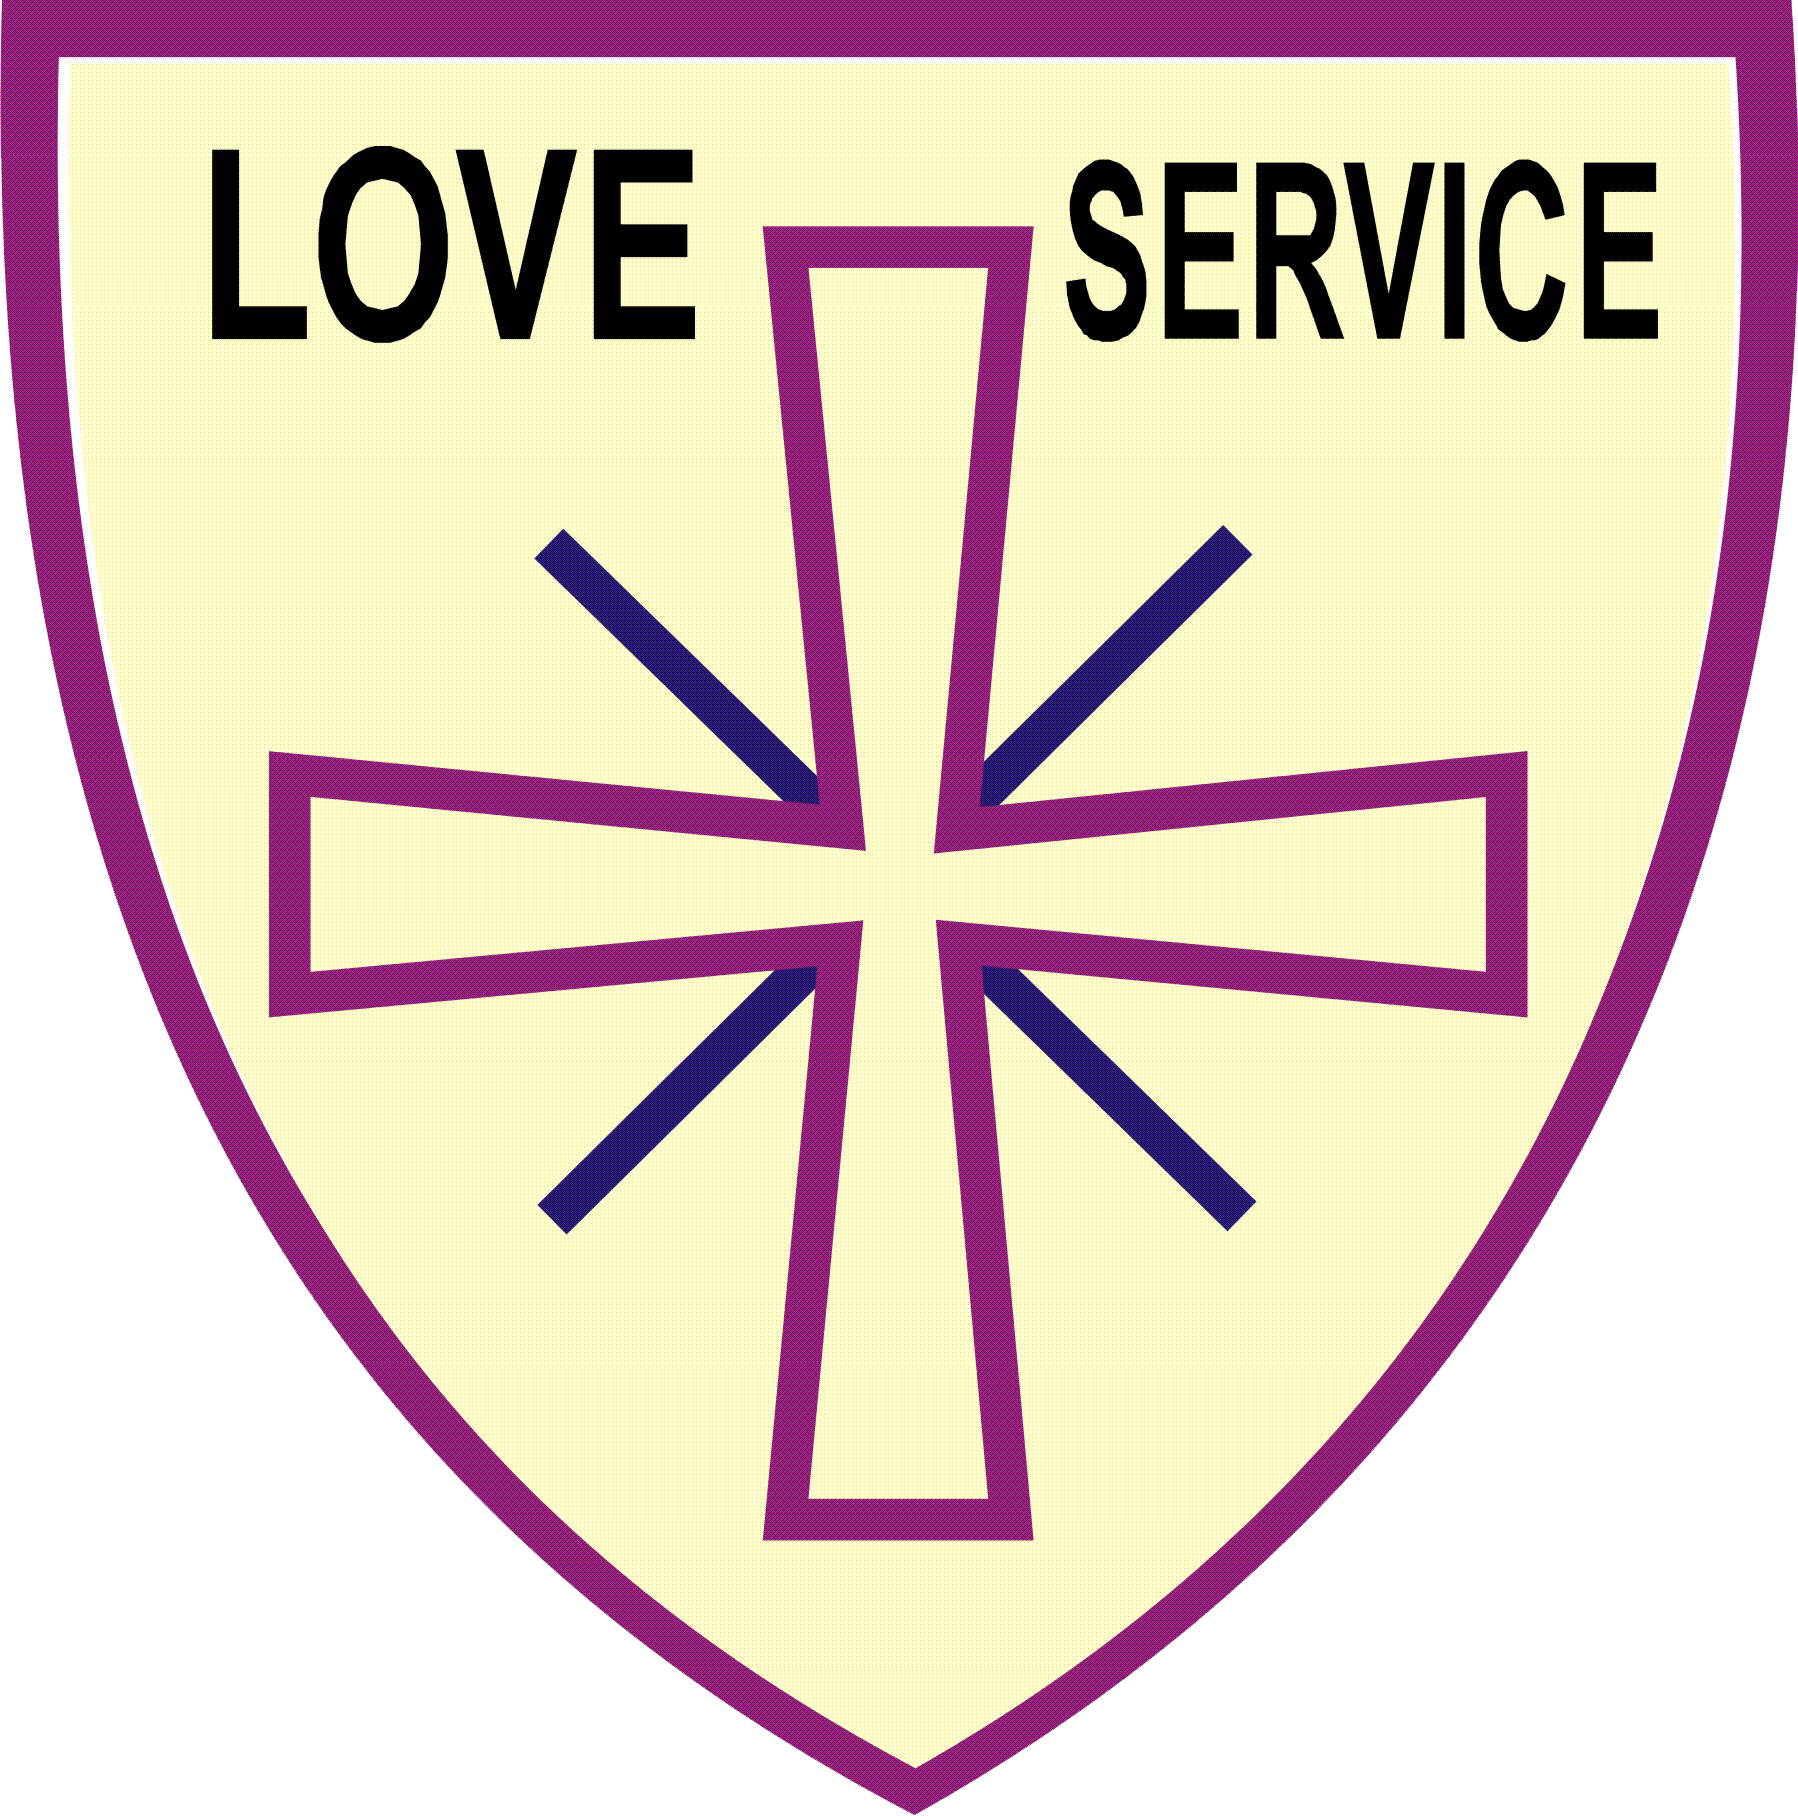 Holy cross school|Schools|Education